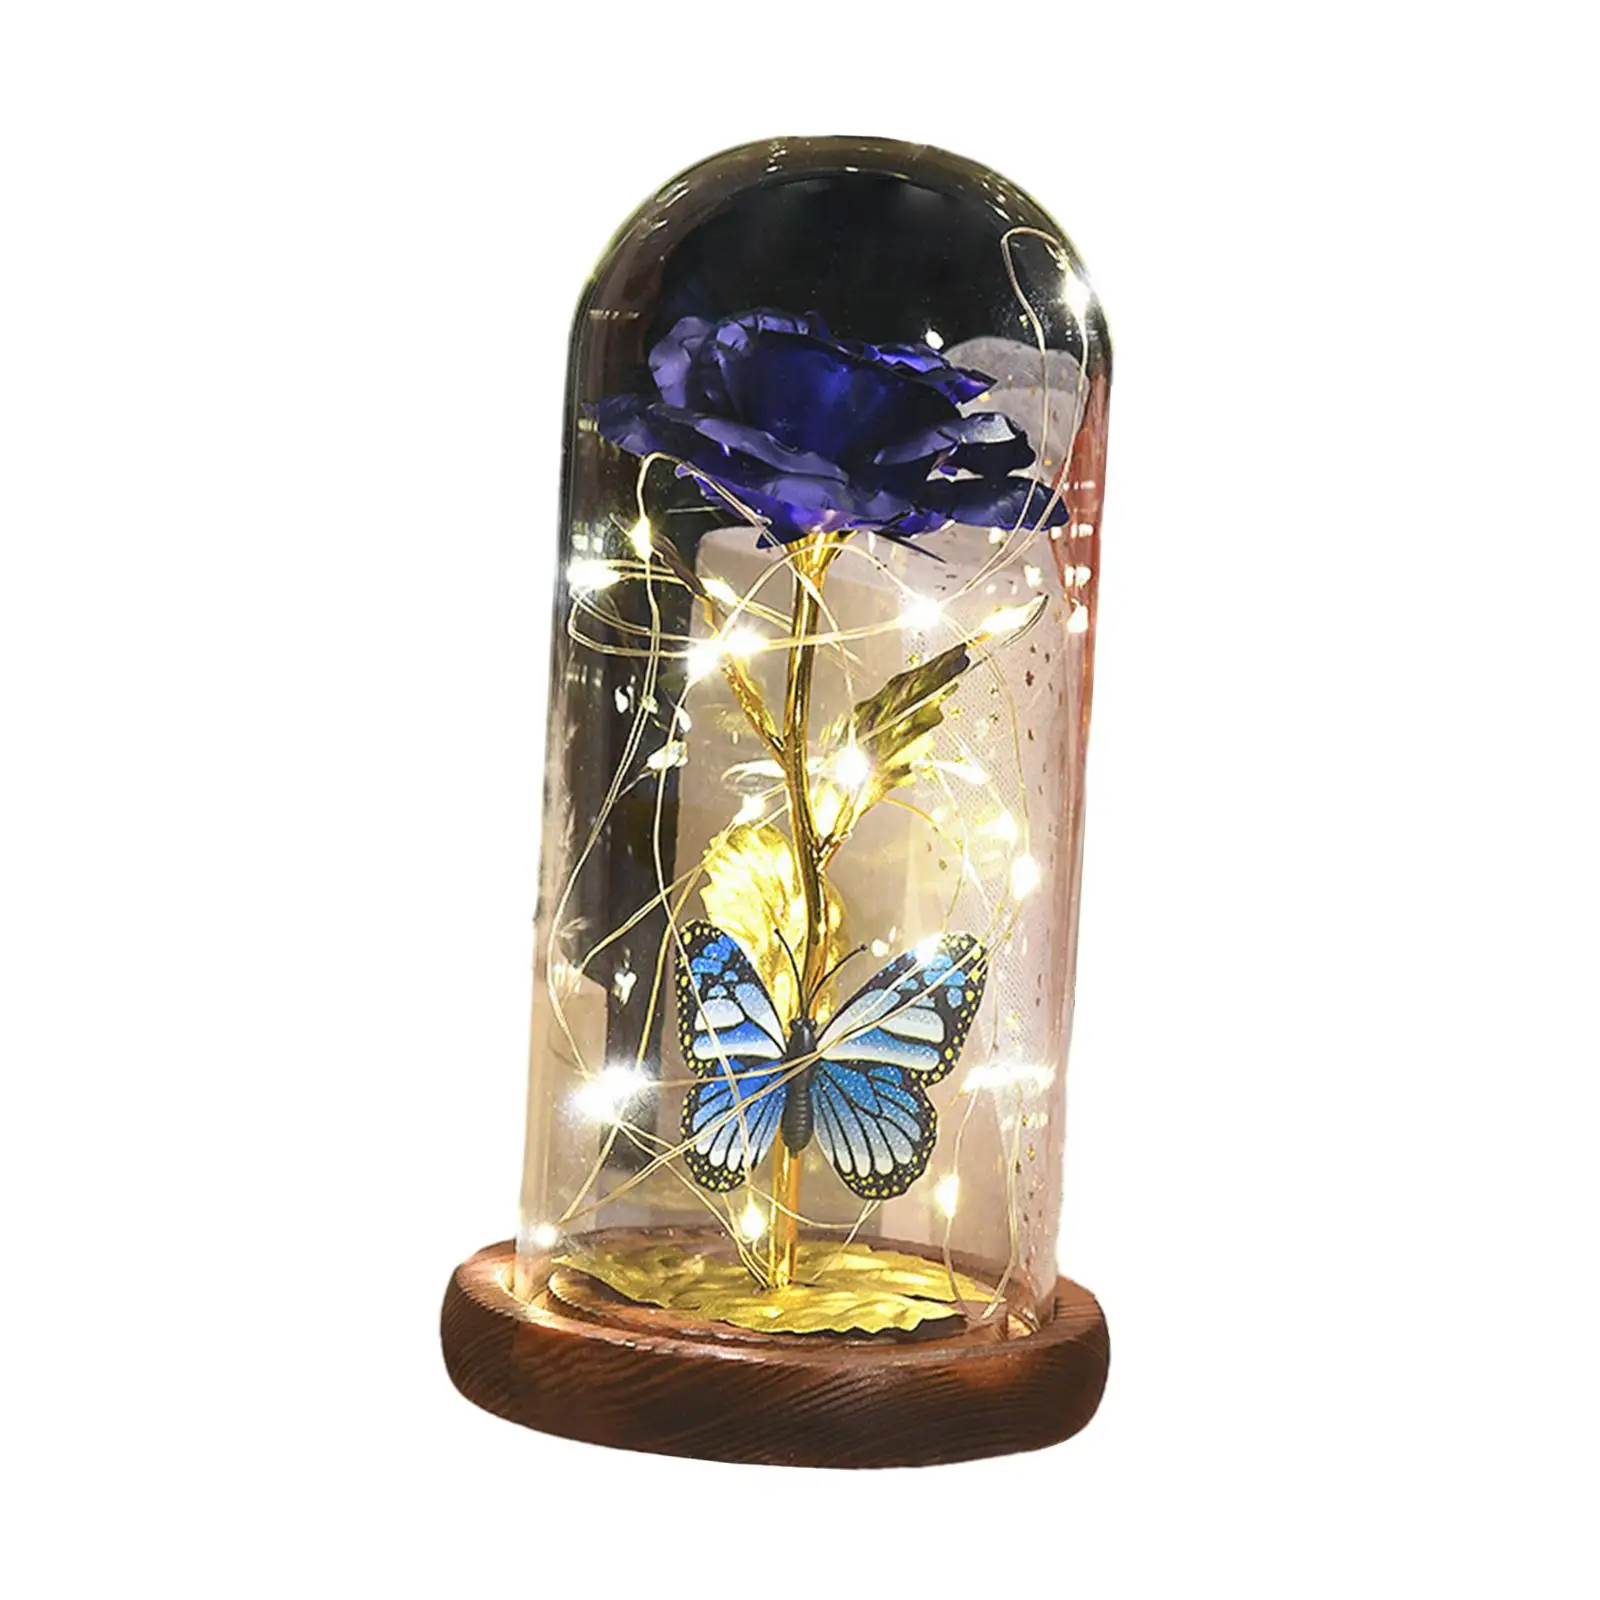 Crystal Gift, Rose Butterfly LED Lamp Light Up Rose in Glass Cover, Rose Flower